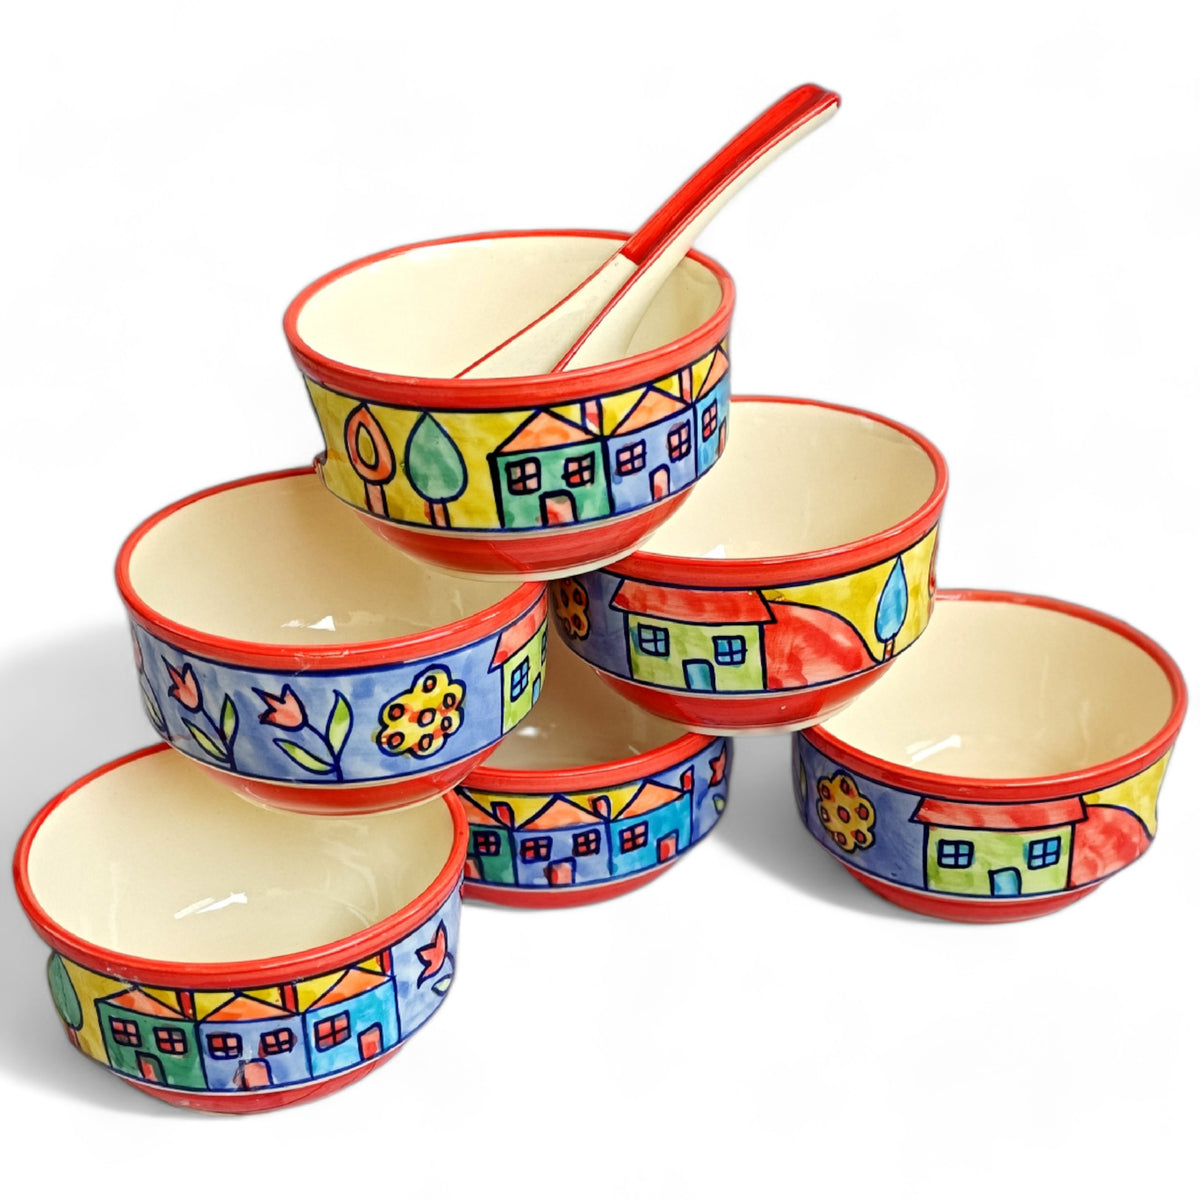 Claymistry Ceramic Handprinted Multicolor Design Serving Bowl | Set of 6 | 12cm * 12cm * 6cm | Glossy | Dishwasher & Microwave Safe | Salad, Fruit, Dessert, Mixing Bowl | Premium Kitchen Crockery